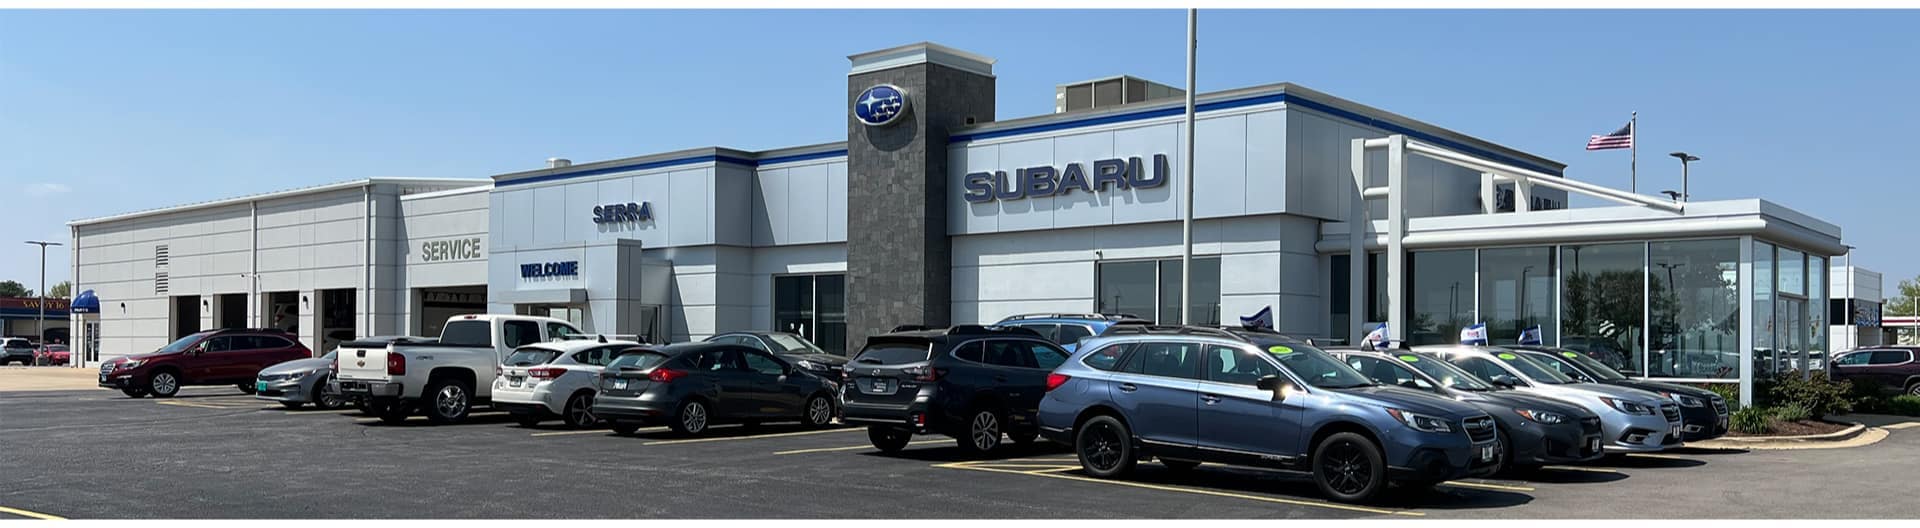 An exterior view of Serra Subaru Champaign